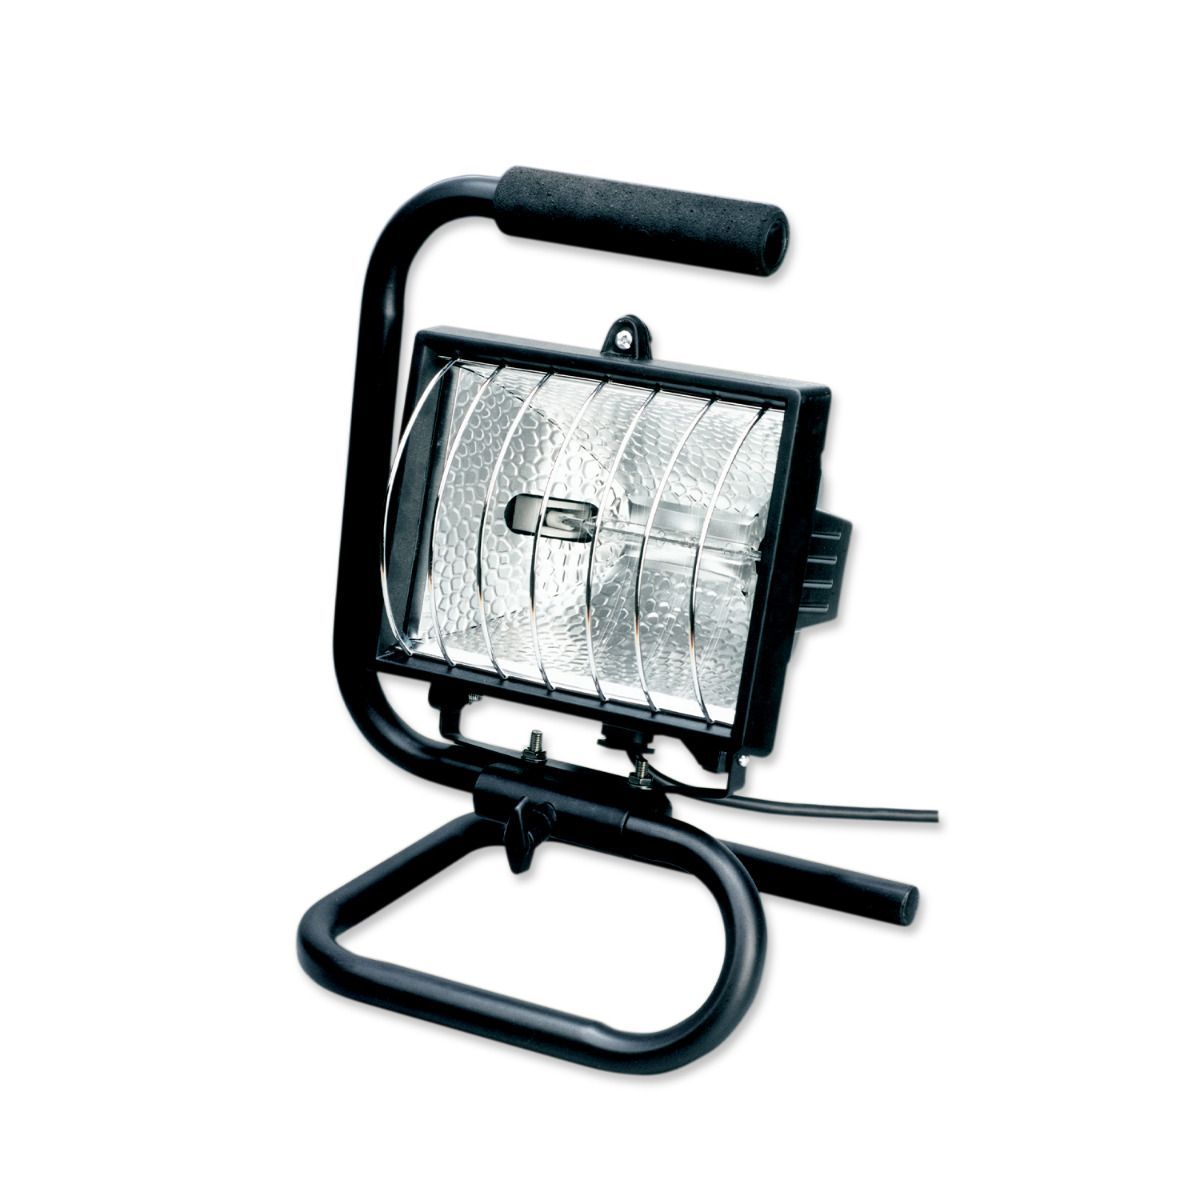 Intex Worklight Portable Stand x 150W